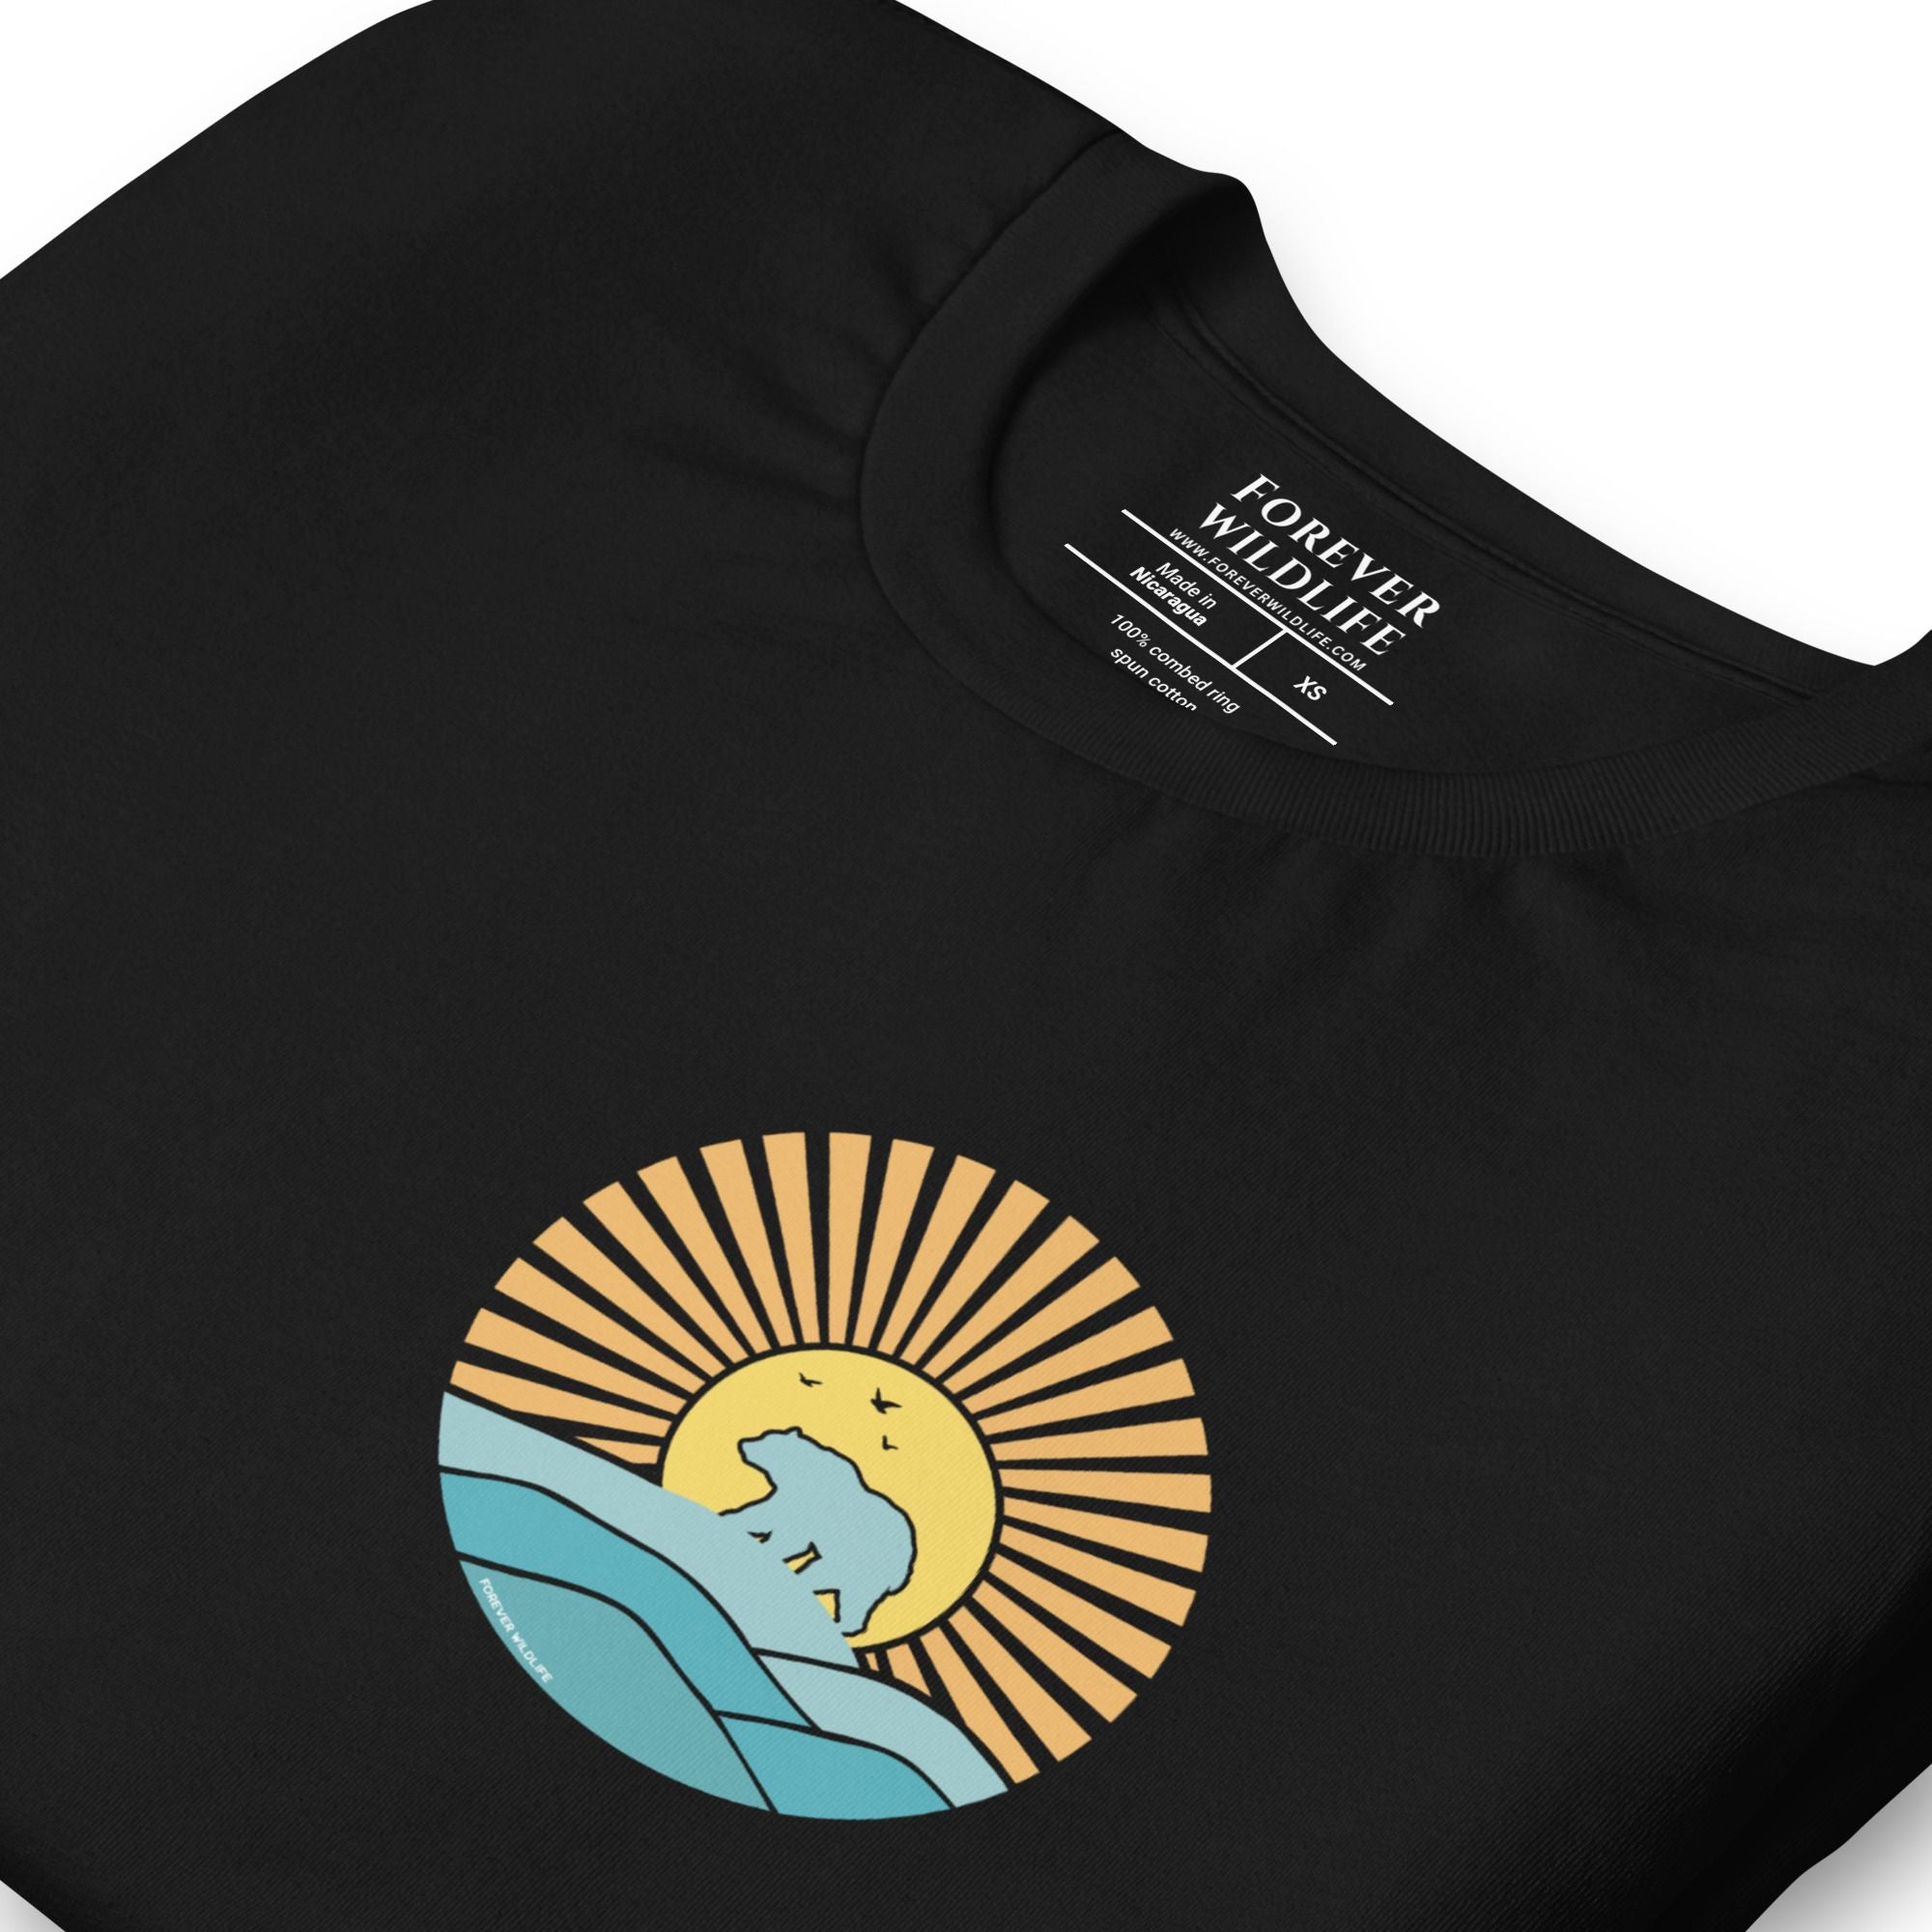 Polar Bear T-shirt in Black, Premium Wildlife Animal Inspirational T-shirt Design, part of Wildlife T-Shirts & Clothing from Forever Wildlife.